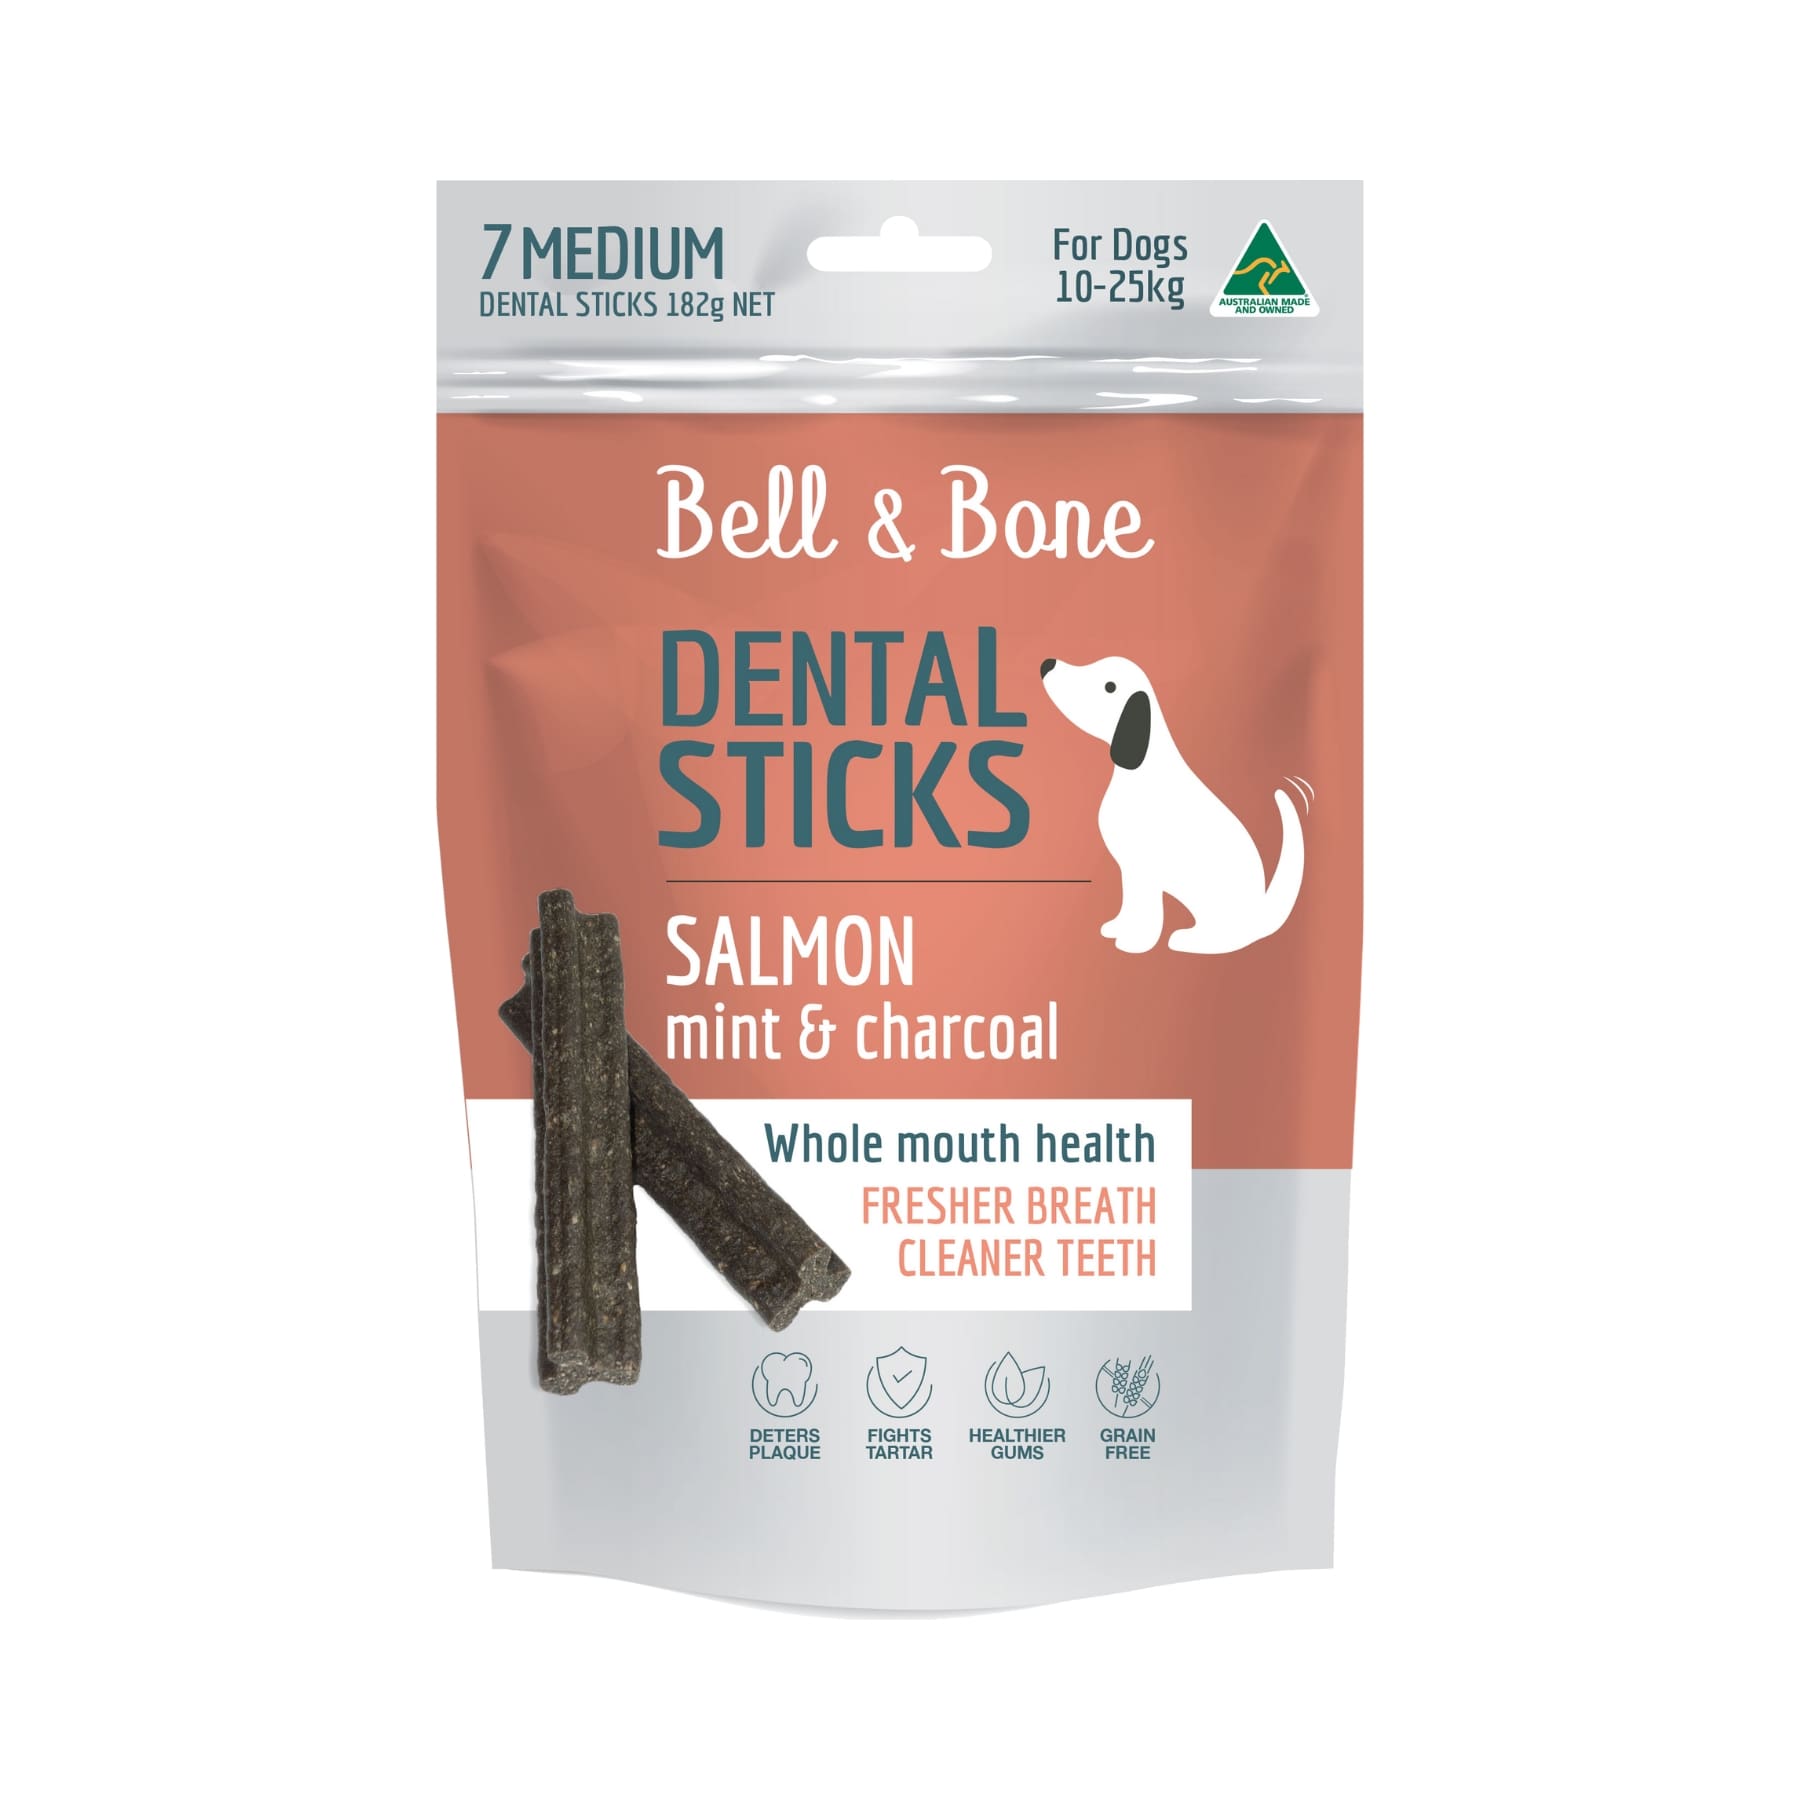 Bell & Bone Dental Sticks Salmon, Mint & Charcoal Medium. Australian Made Dental Treats for Dogs.